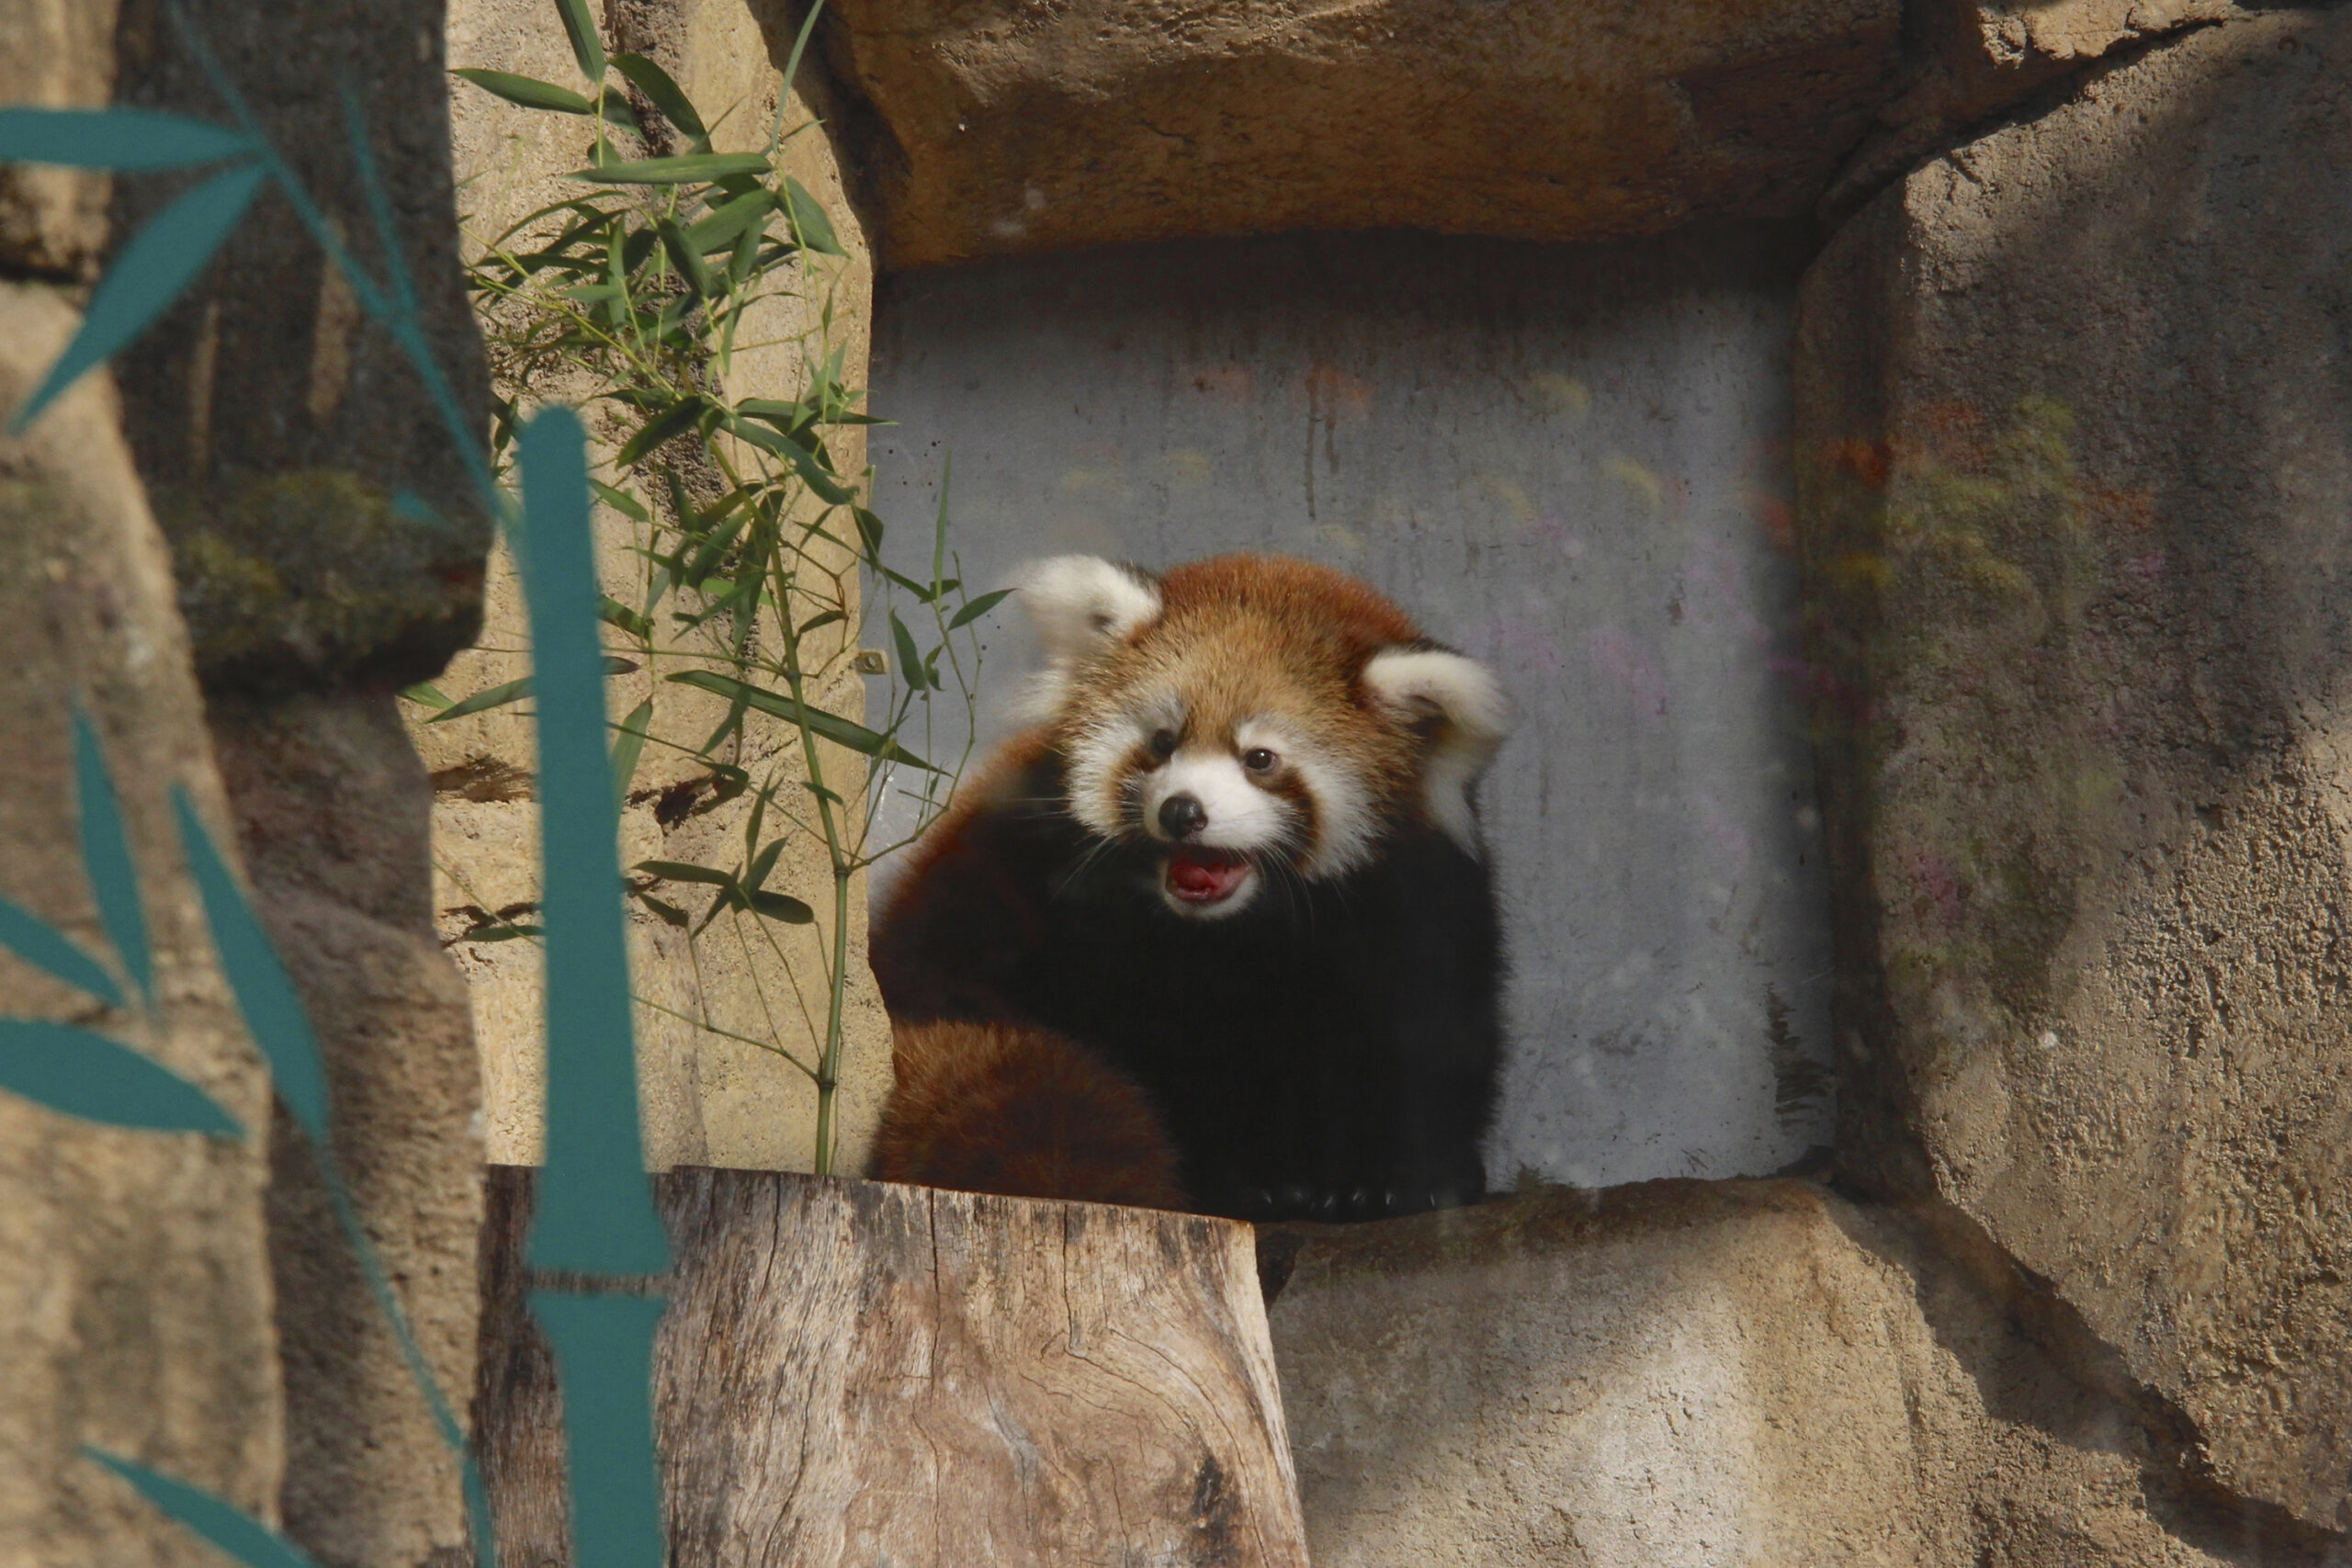 Kiki a red panda at the Milwaukee County Zoo